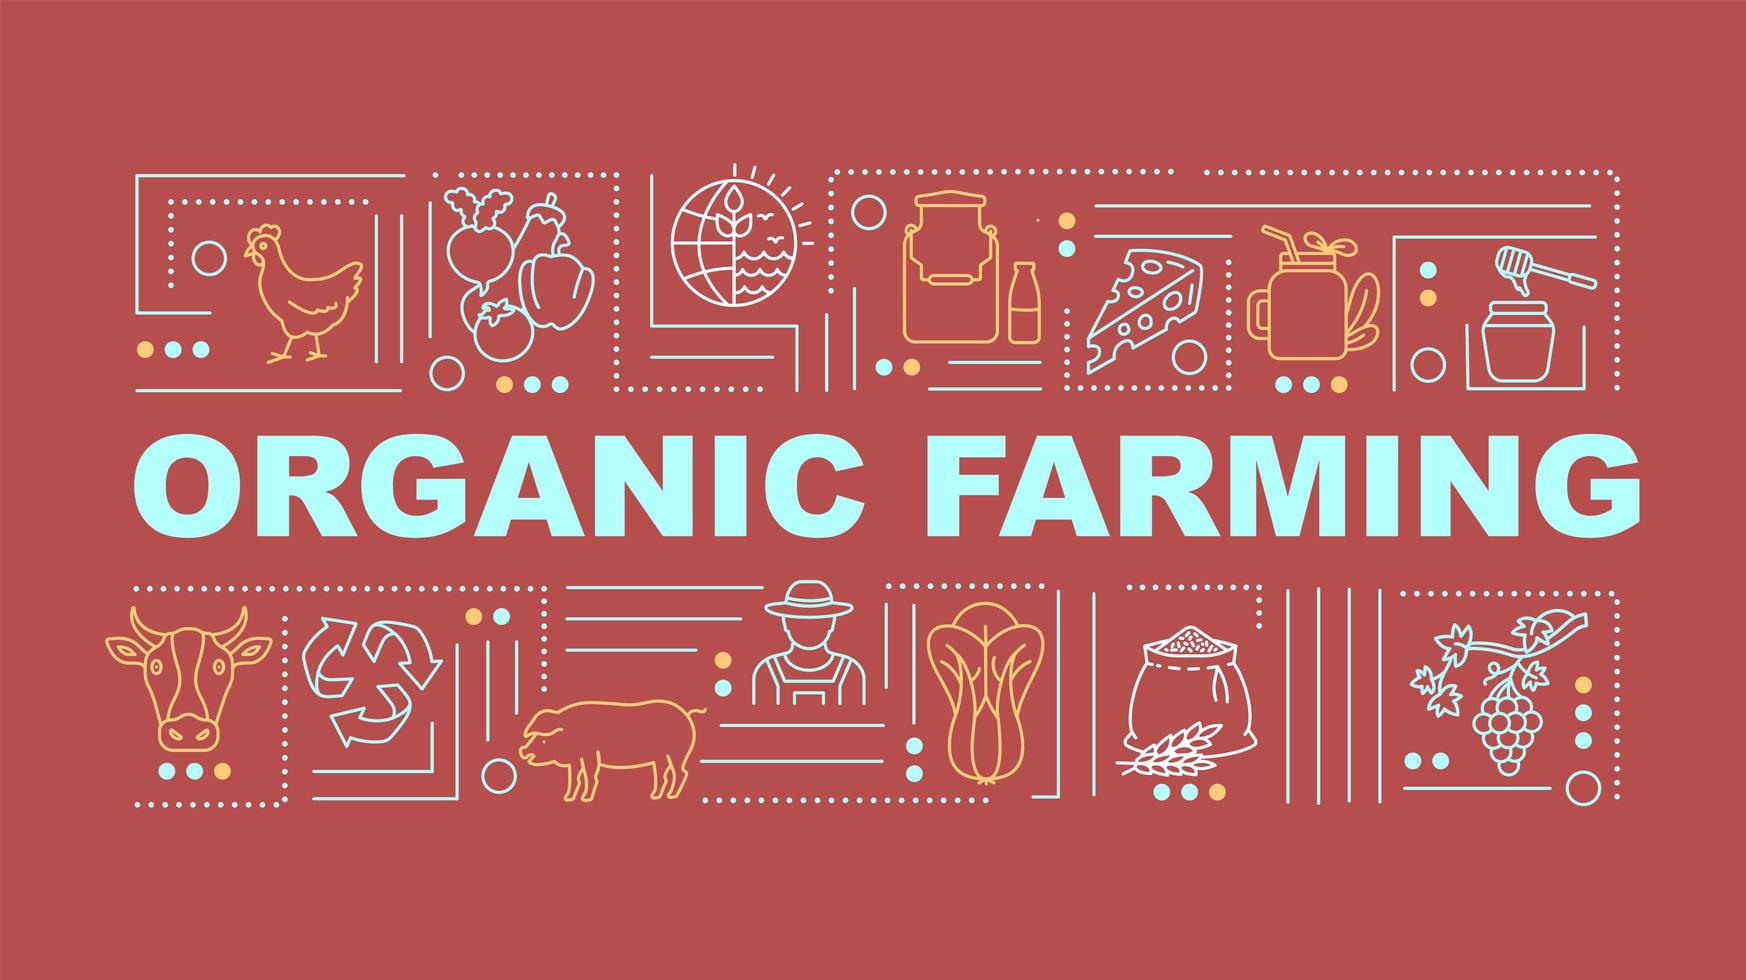 Organic farming word concepts banner vector